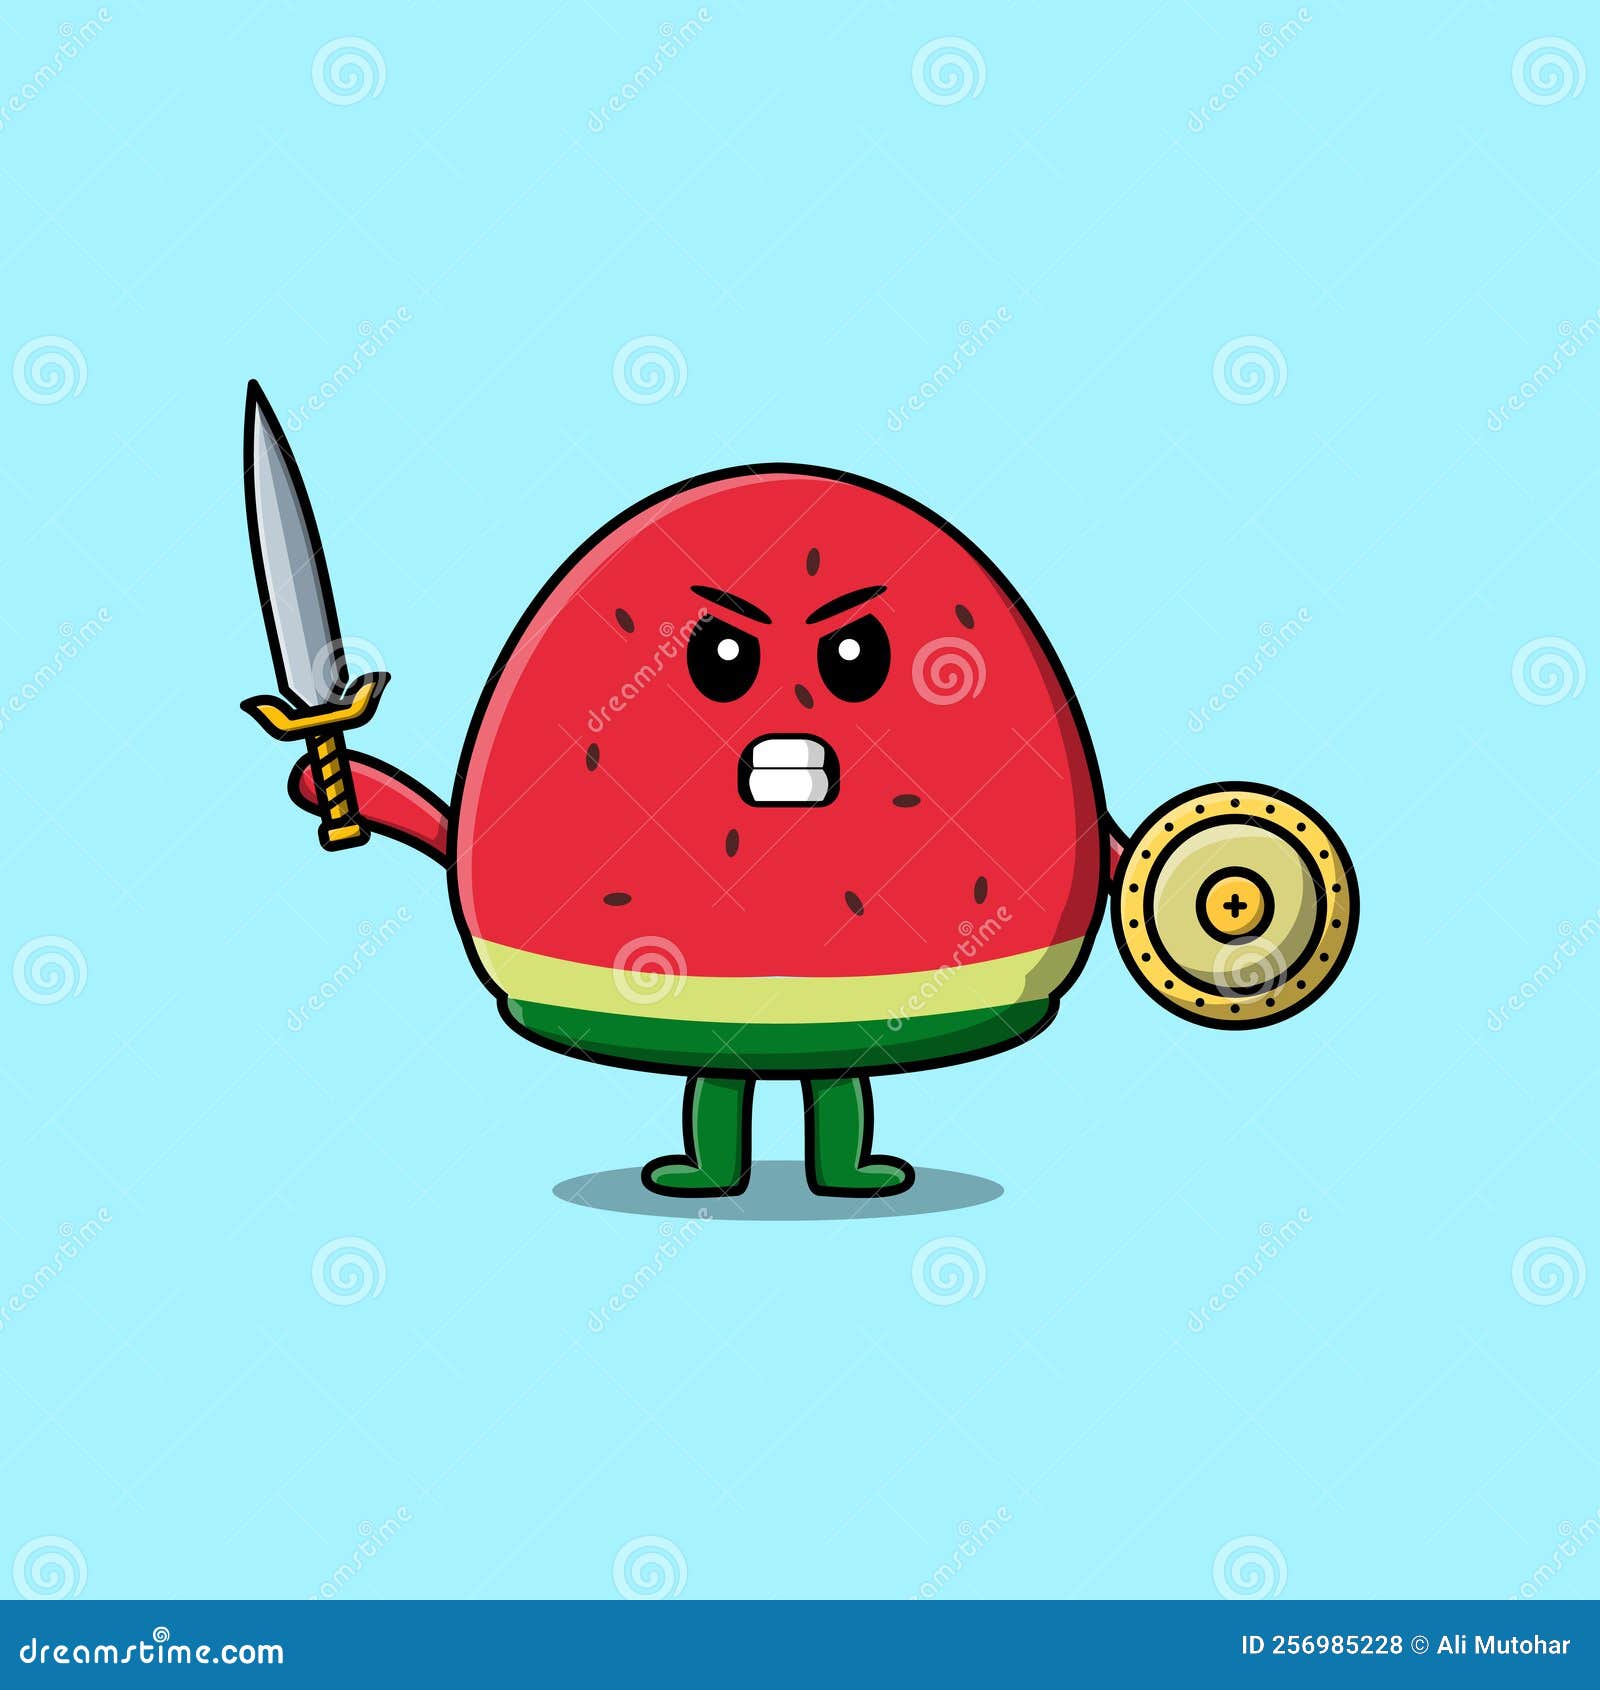 Cute Cartoon Watermelon Holding Sword and Shield Stock Vector ...